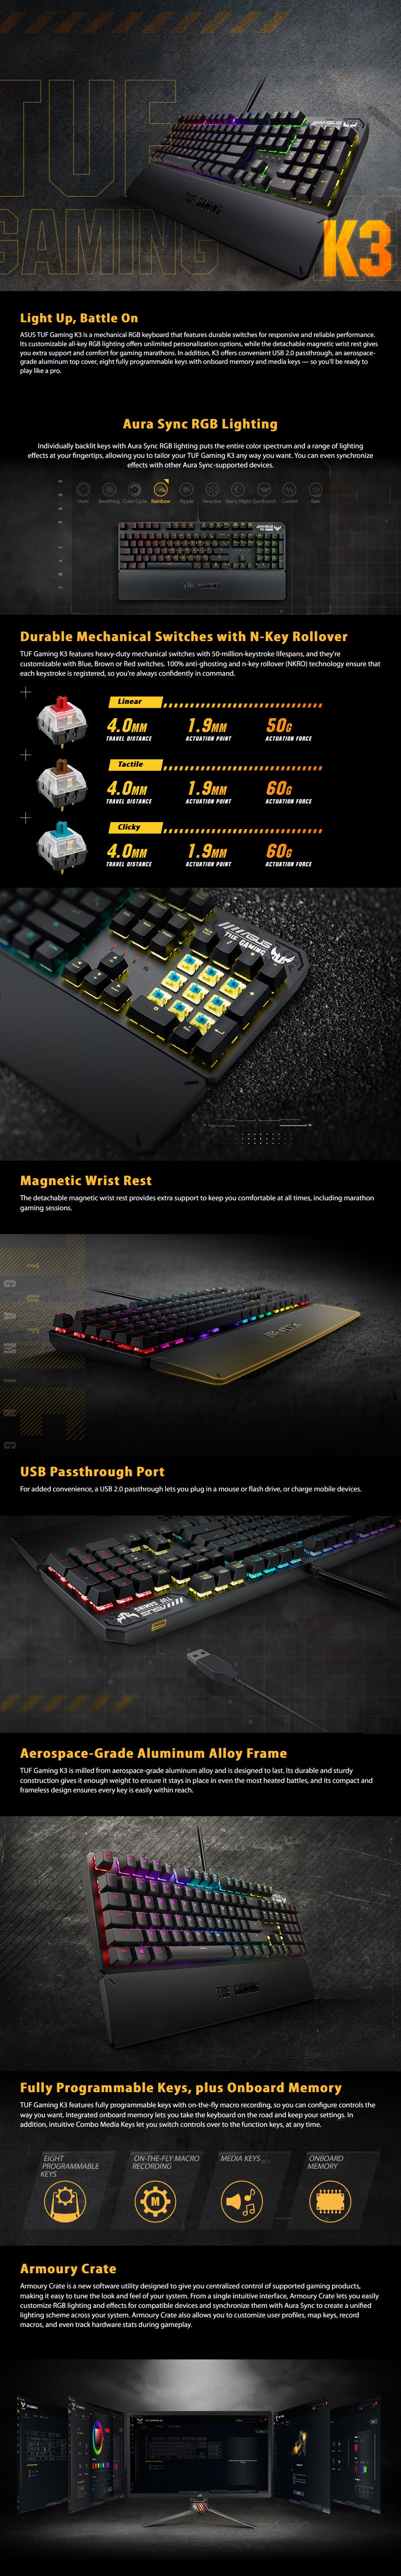 ASUS TUF Gaming K3 Mechanical Gaming Keyboard - Overview 1